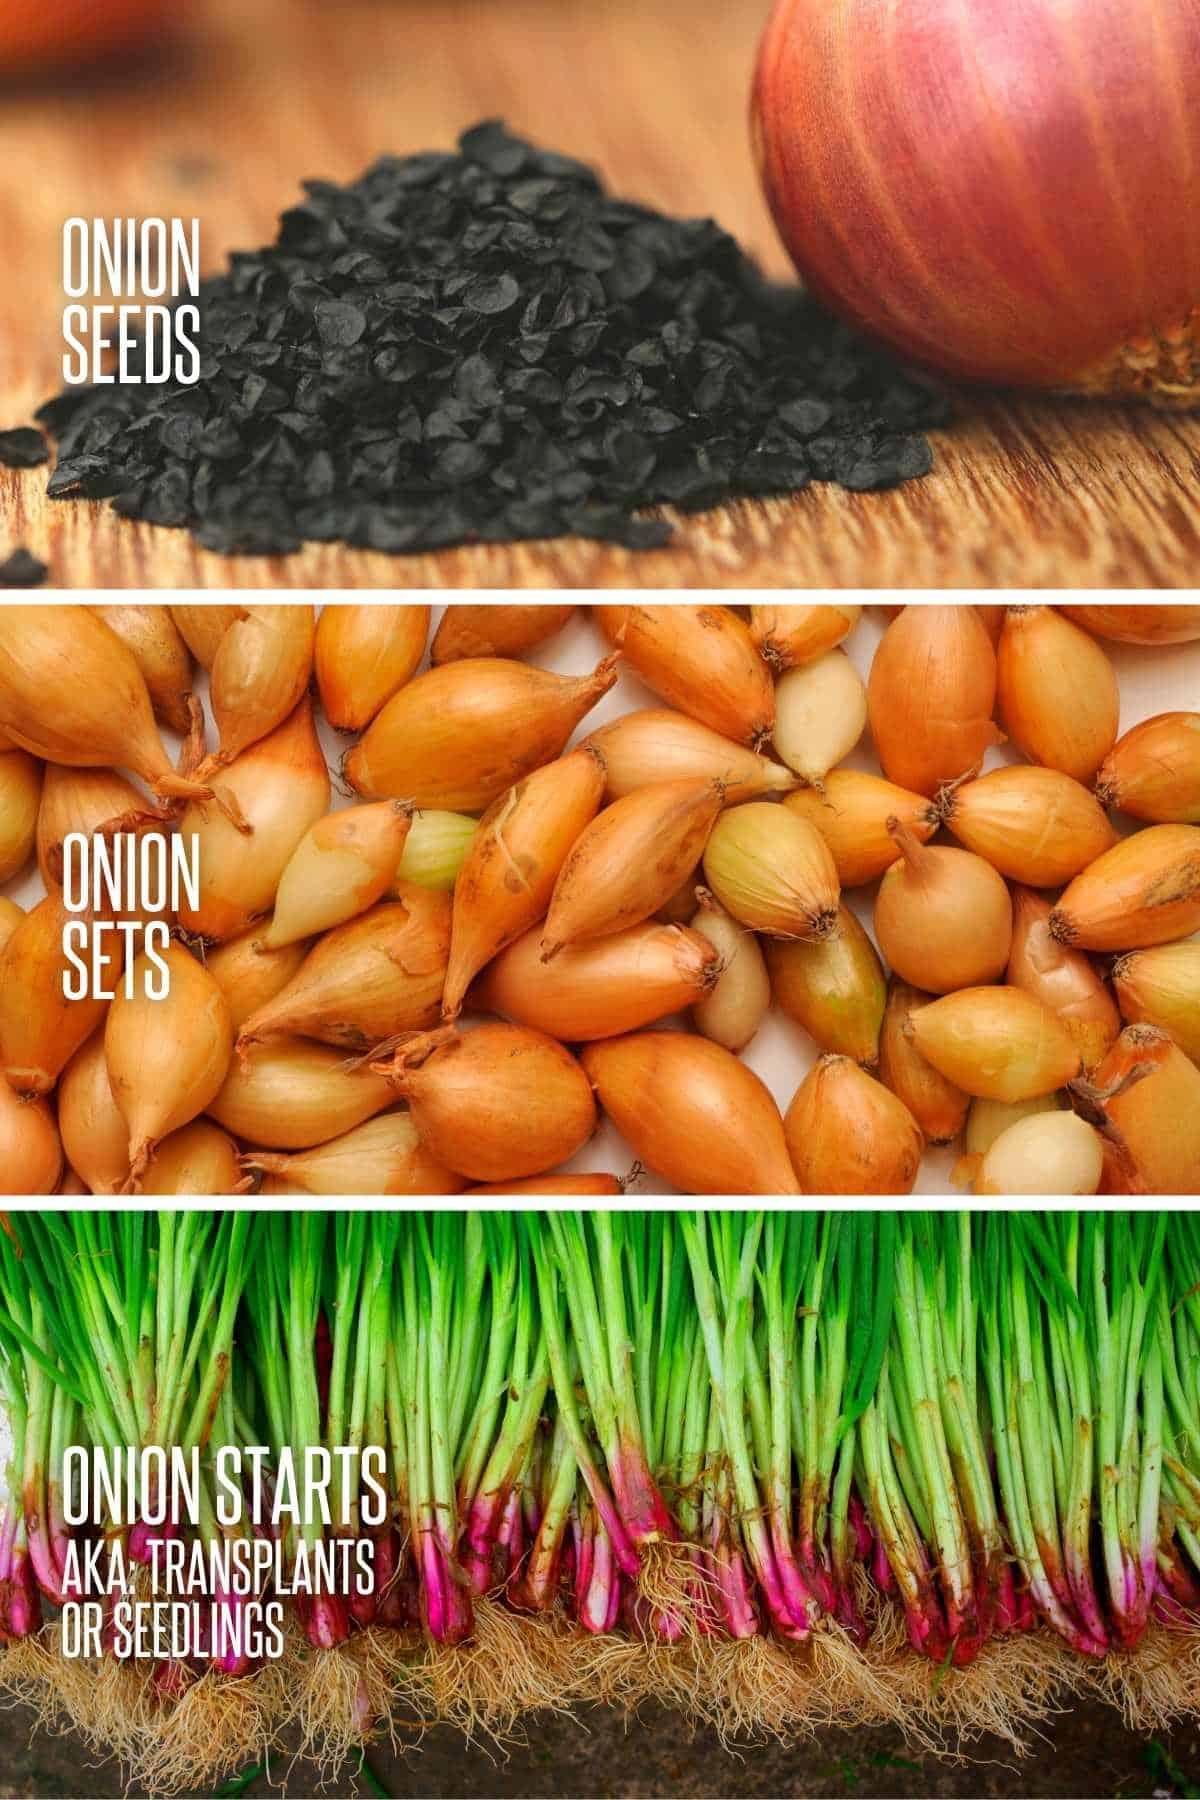 A divided image shows onion seeds versus sets versus starts or seedlings